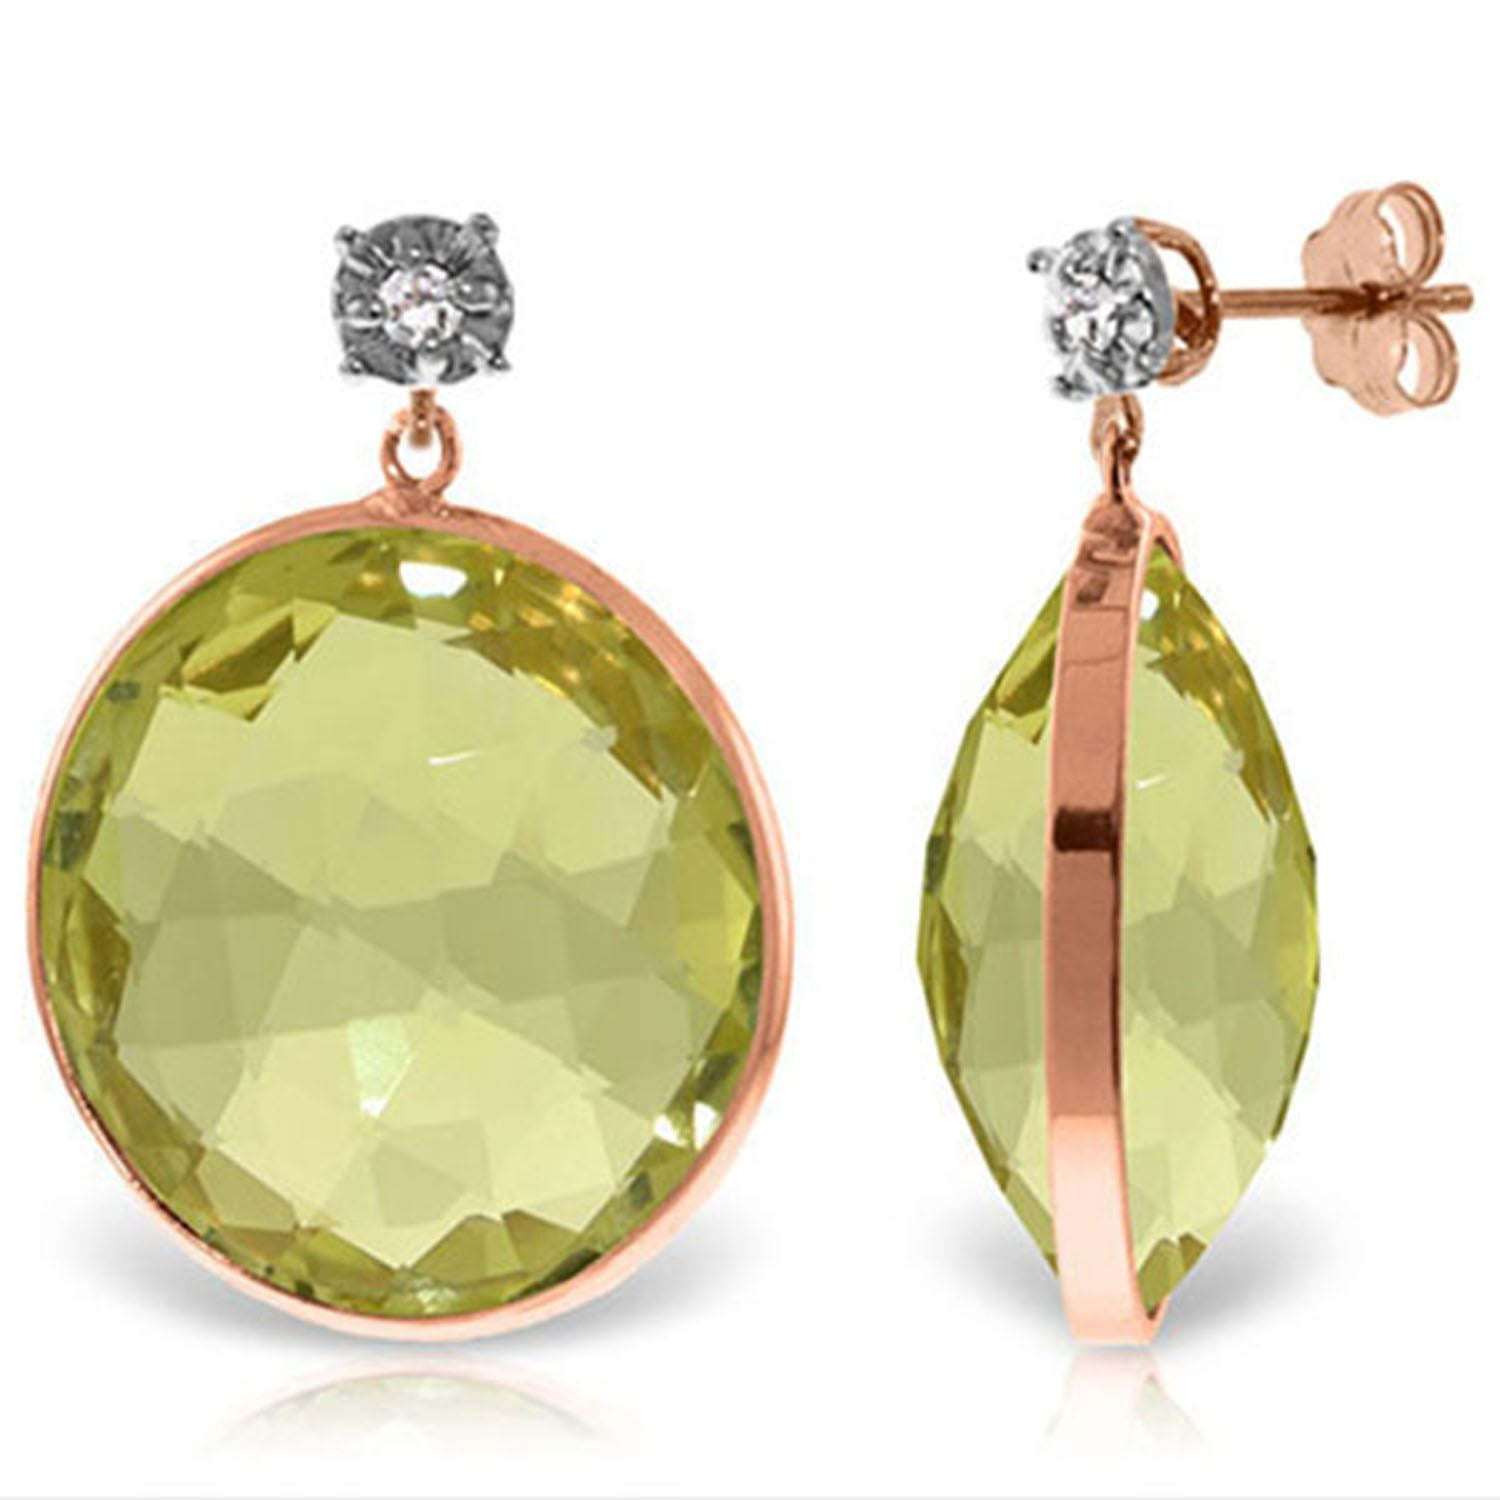 Alarri - ALARRI 14K Solid Rose Gold Diamonds Stud Earrings w/ Dangling ...